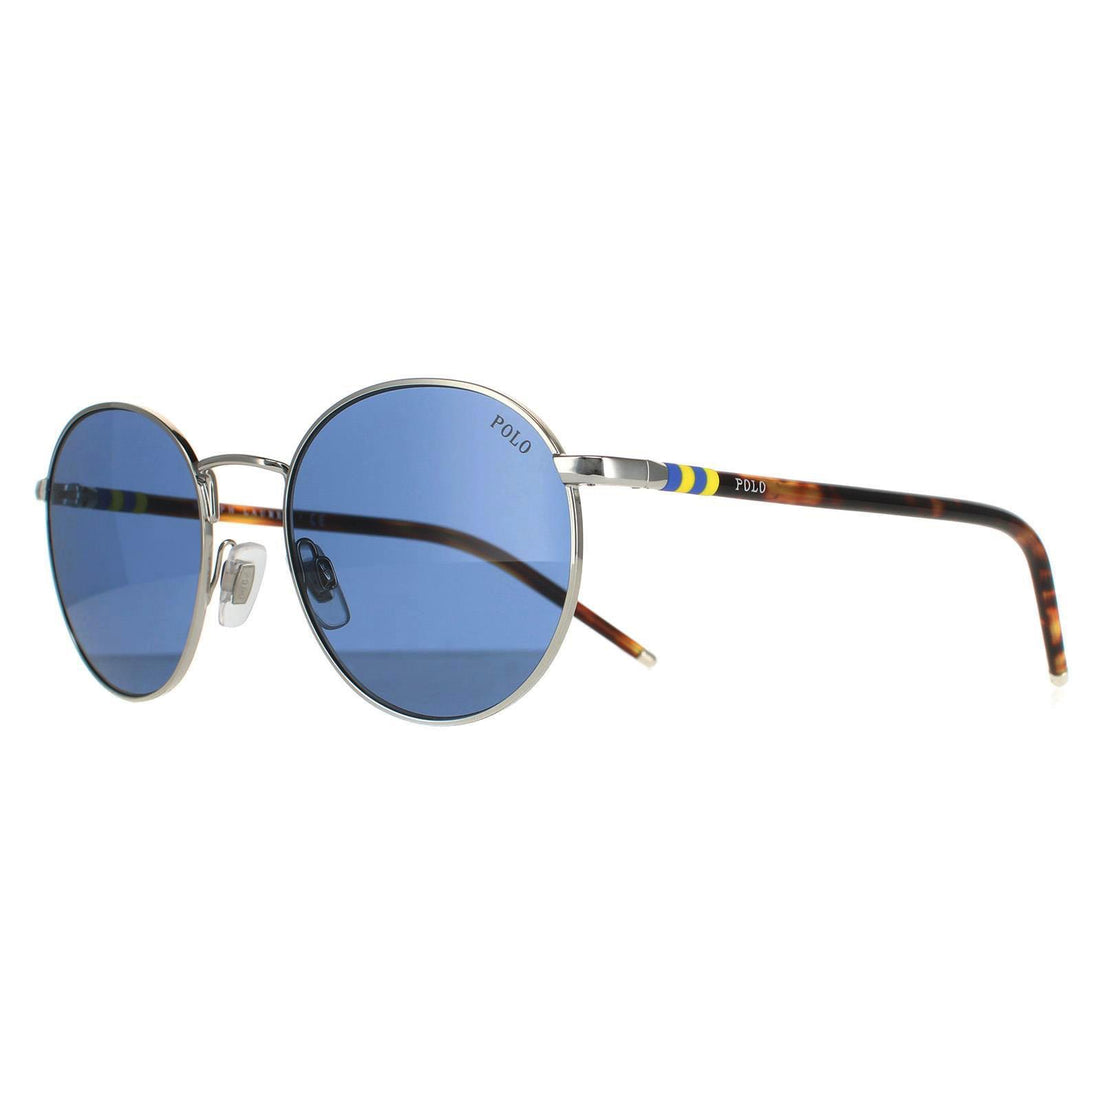 Polo Ralph Lauren Sunglasses PH3133 900180 Shiny Silver Dark Blue